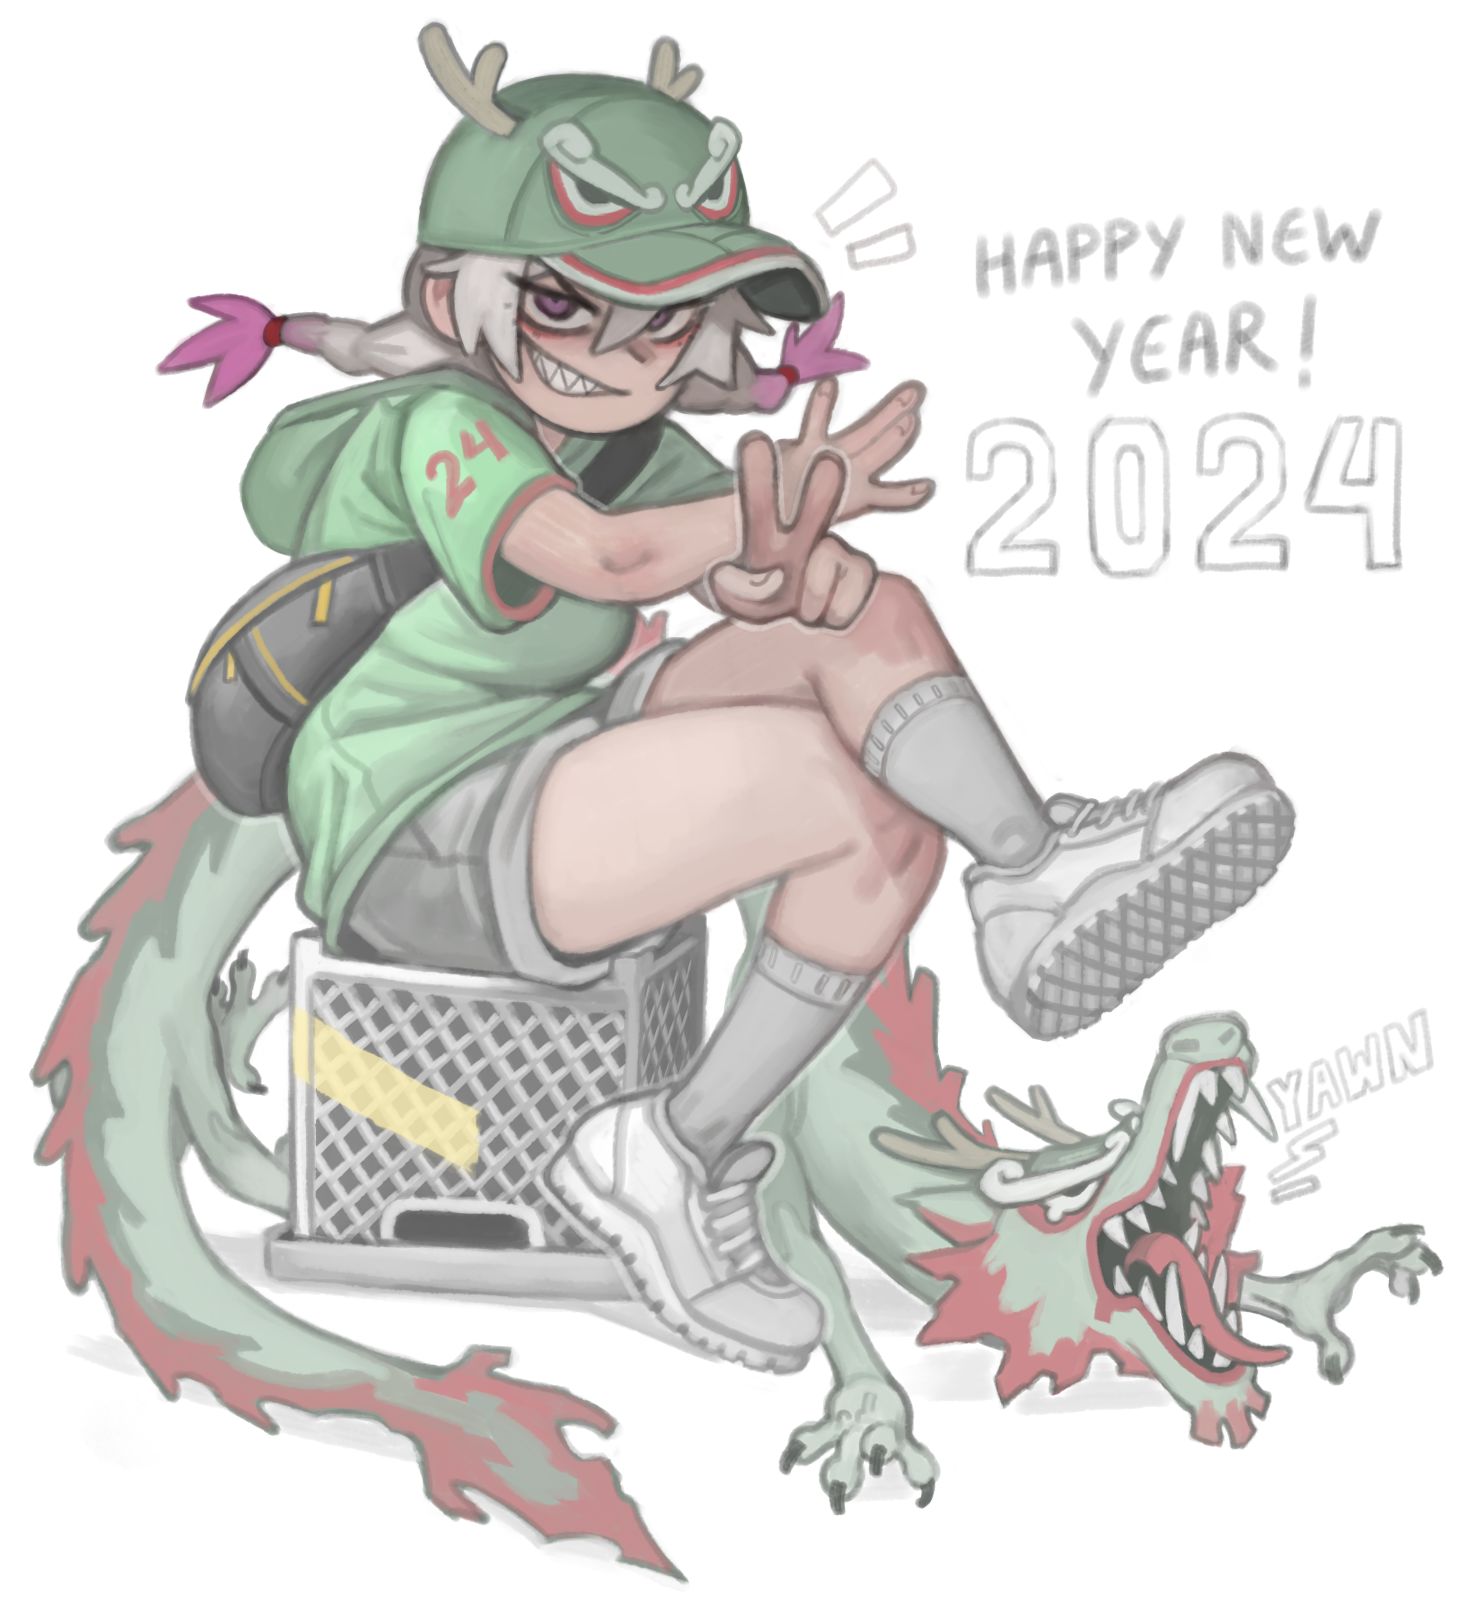 Happy new year!!! 2024